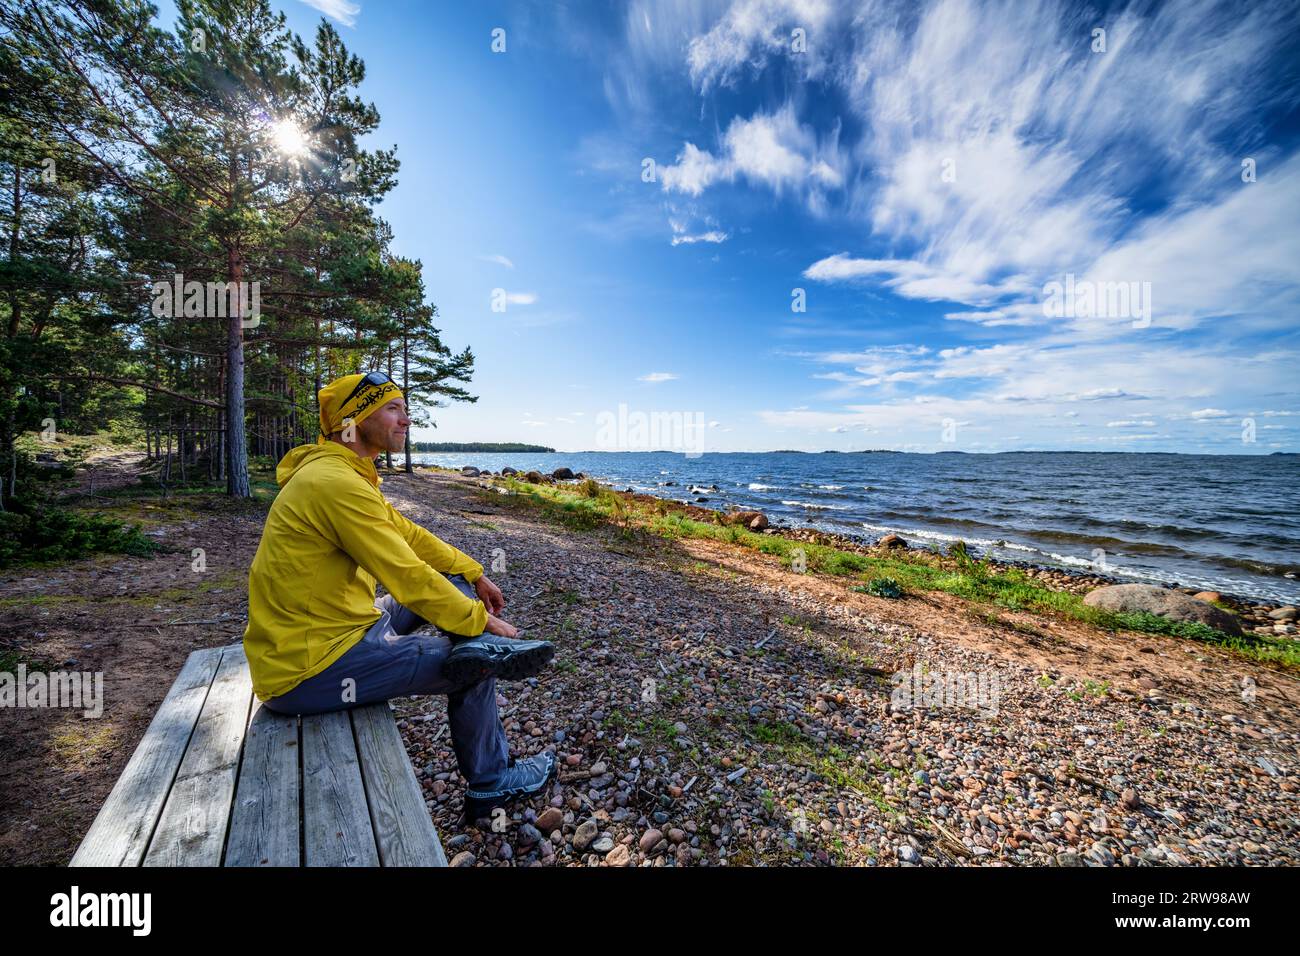 At Uddskatan nature reserve in Hanko, Finland Stock Photo